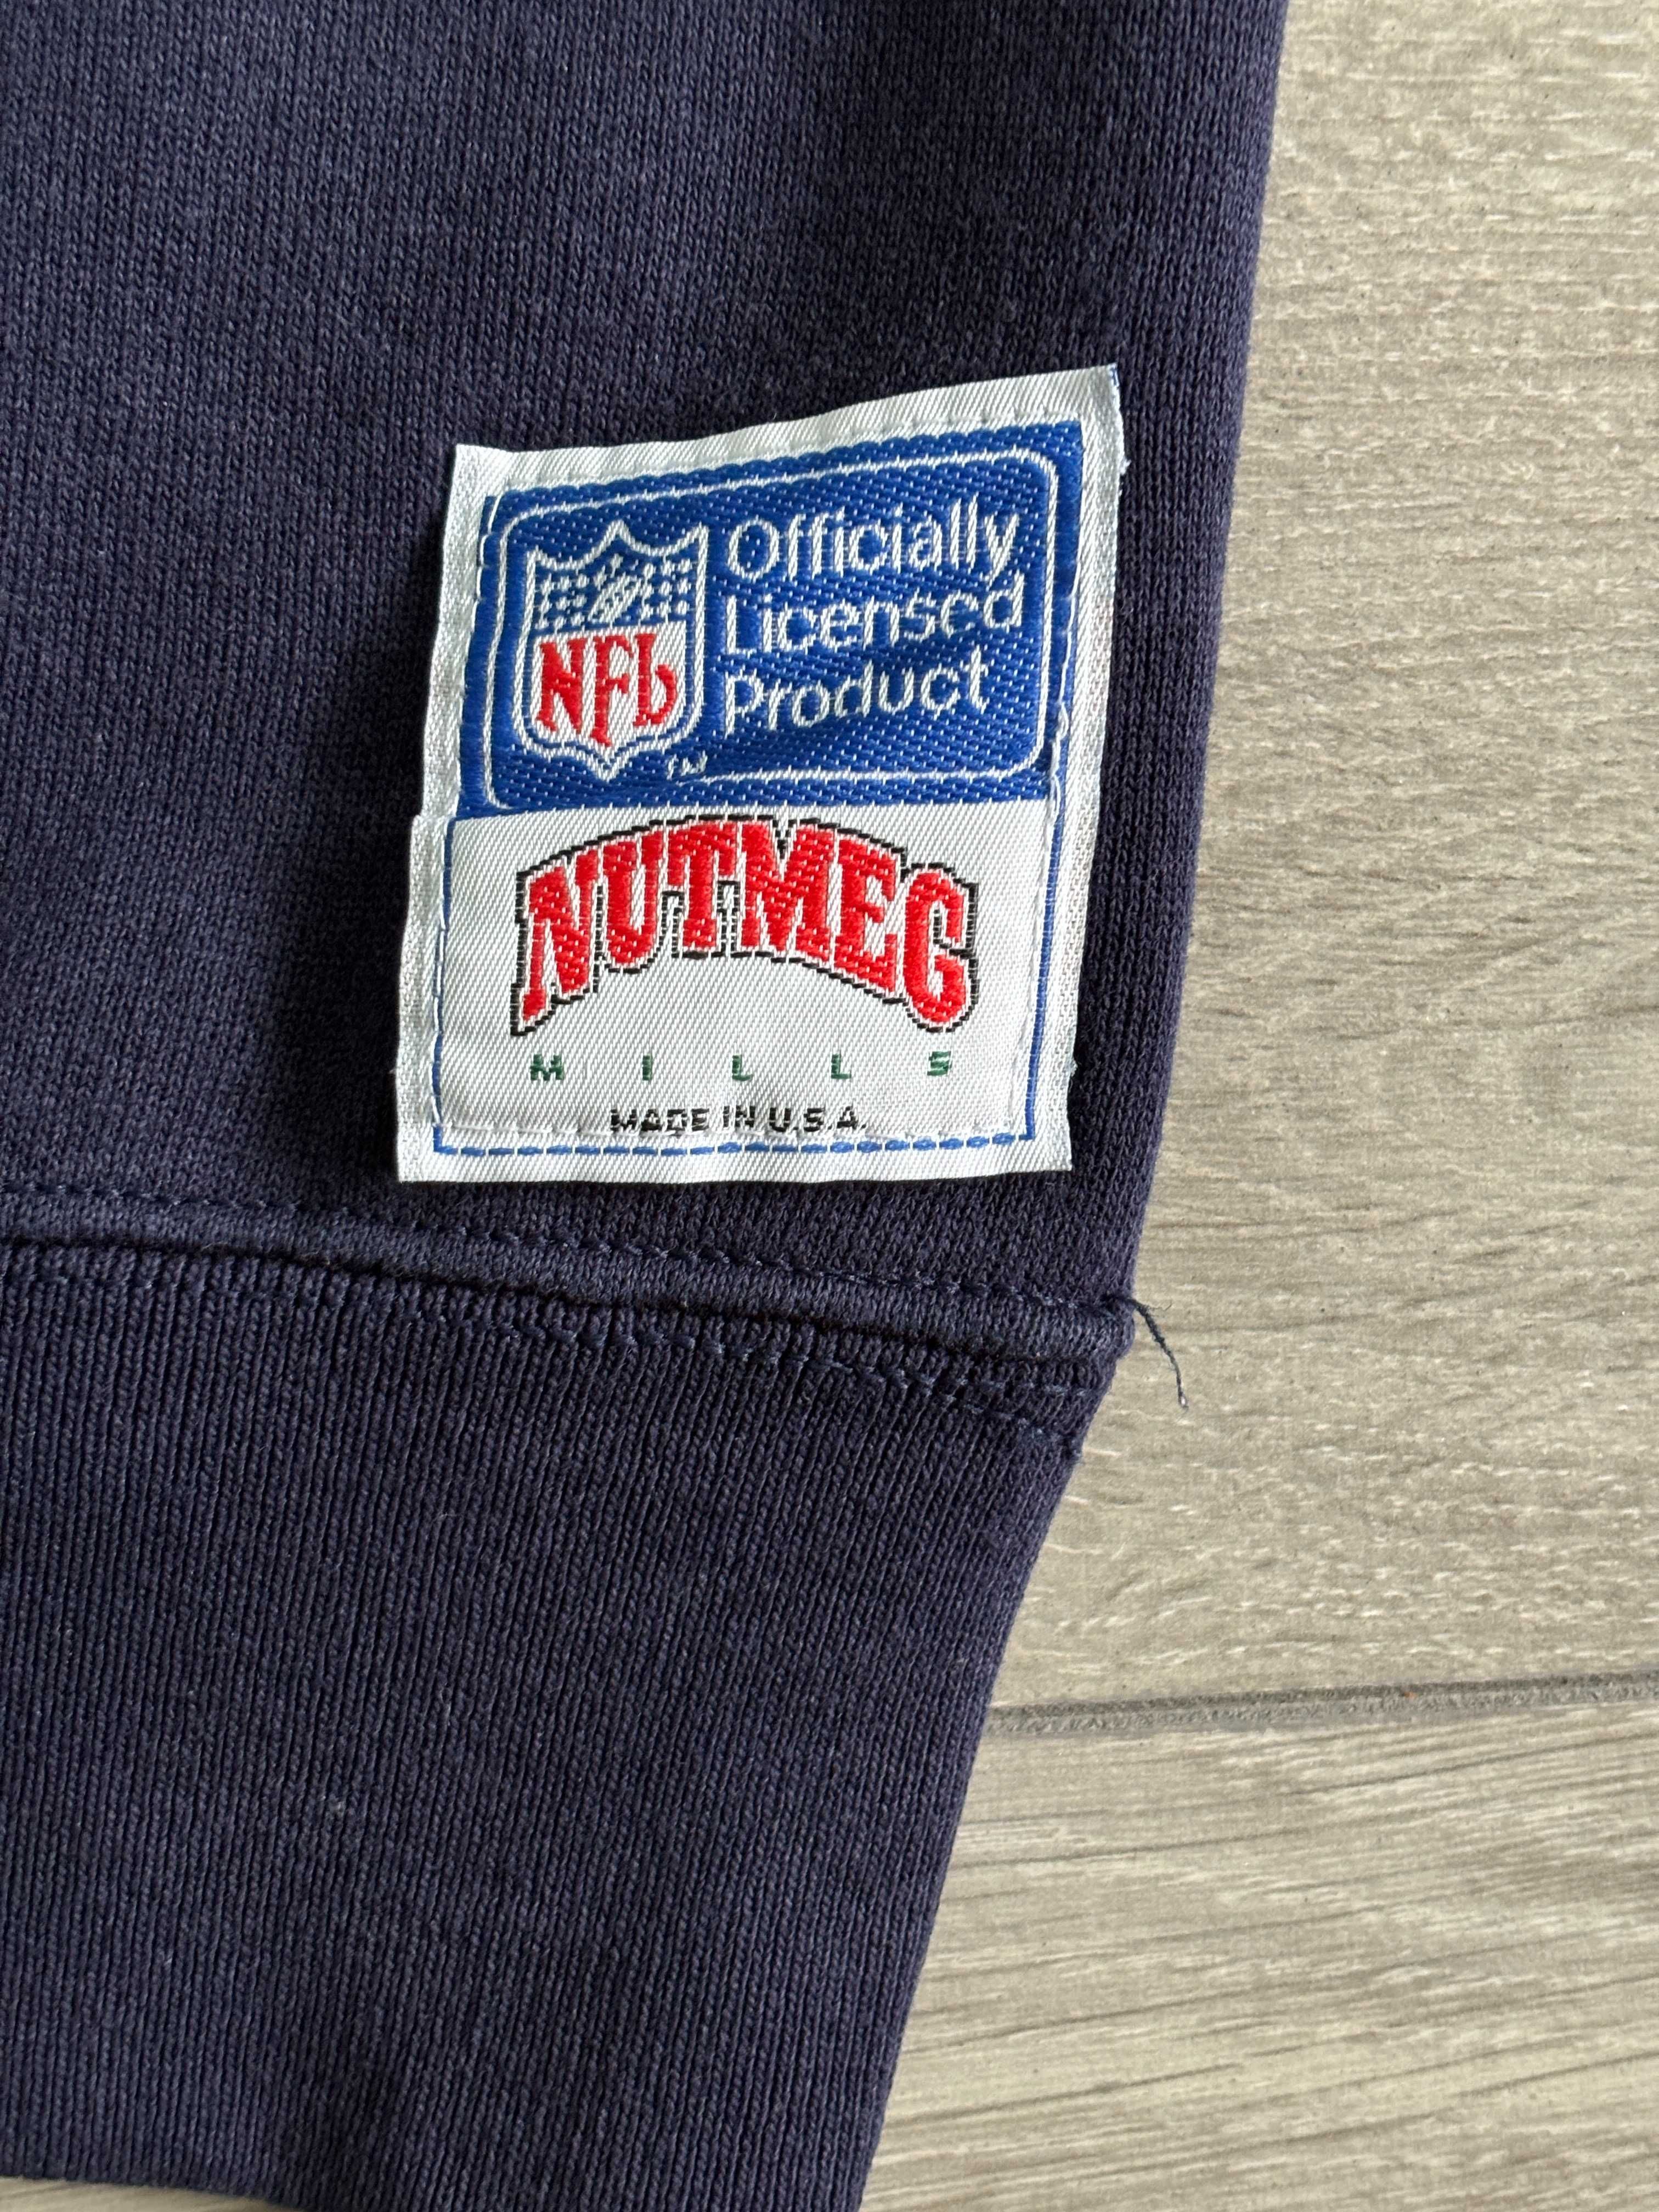 Chicago Bears NFL Vintage Rare Retro Nutmeg USA M Свитшот Кофта Винтаж